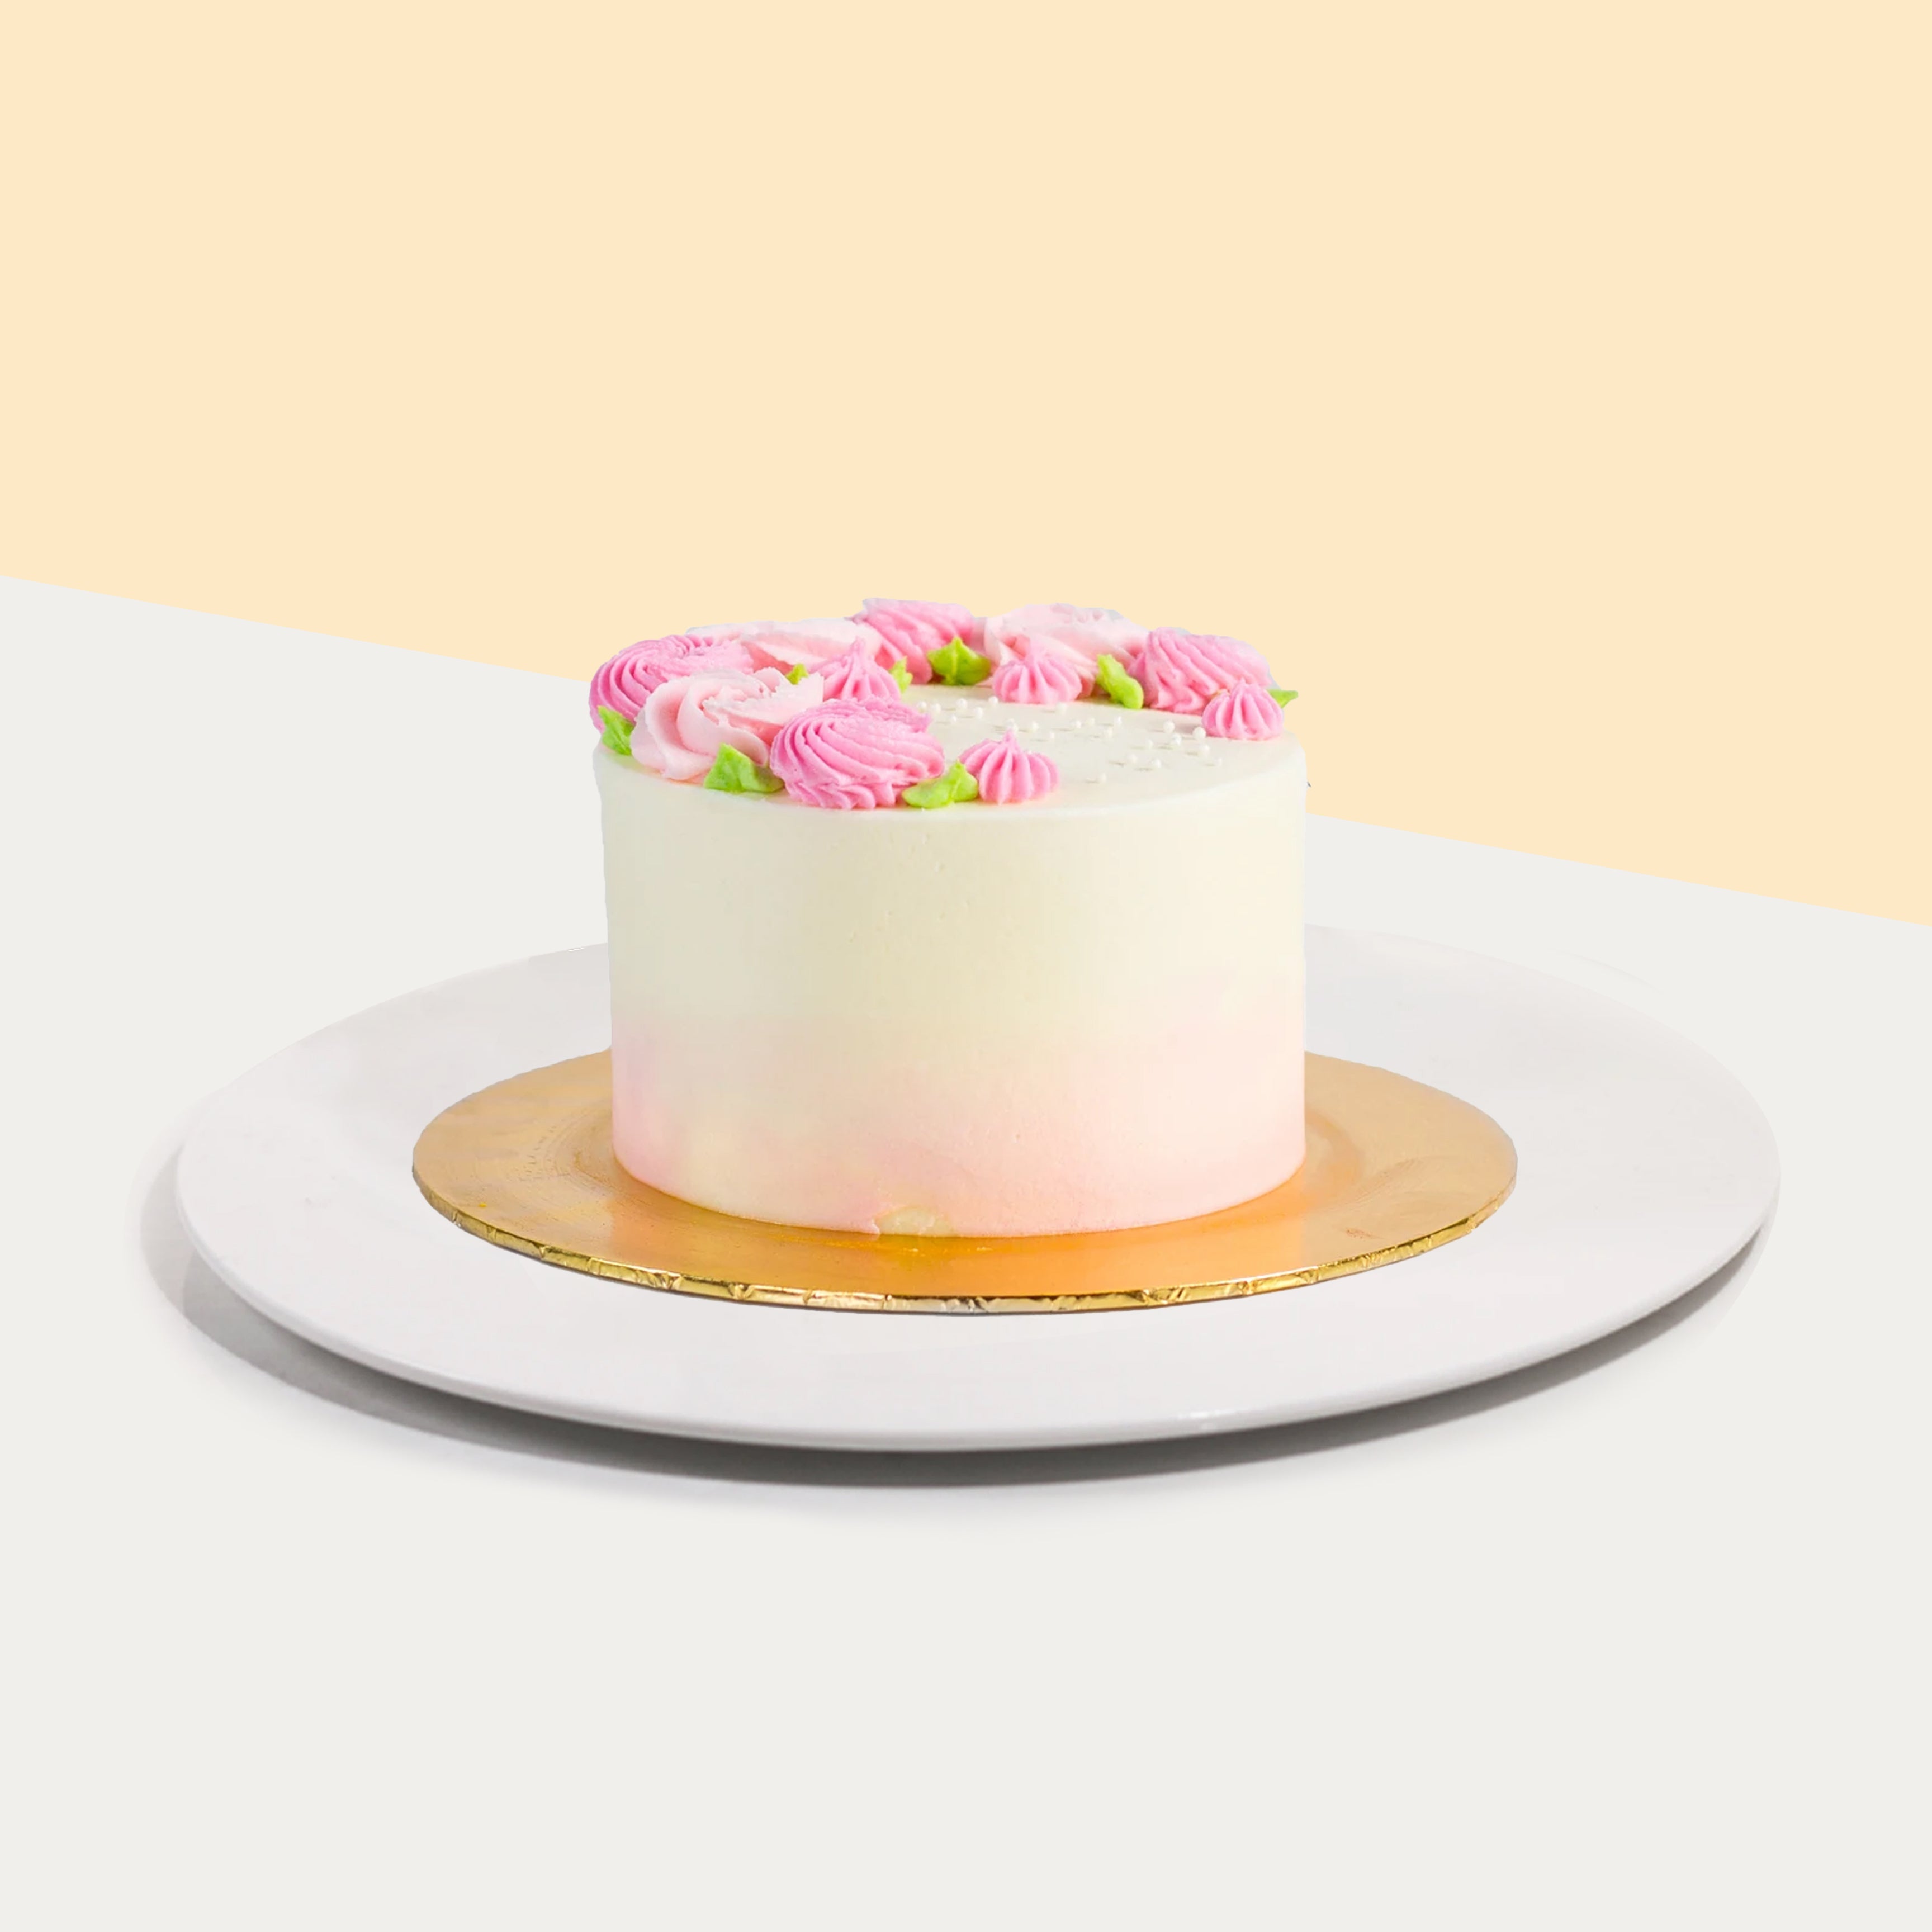 Amor Bakery & Cakes - Tegal Gundil: Menu, Delivery, Promo | GrabFood ID